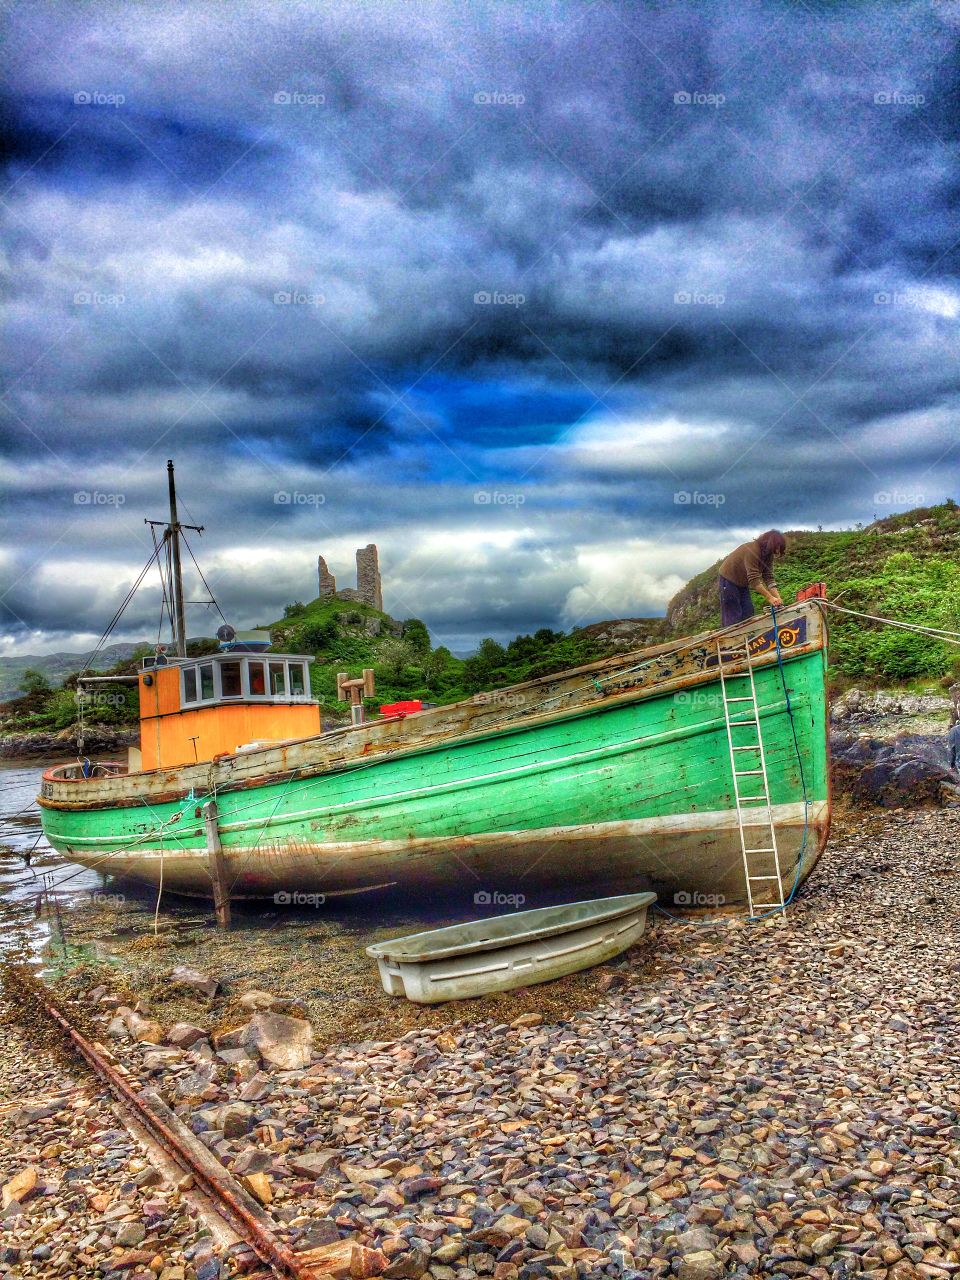 Abandoned boat. Isle of skye.